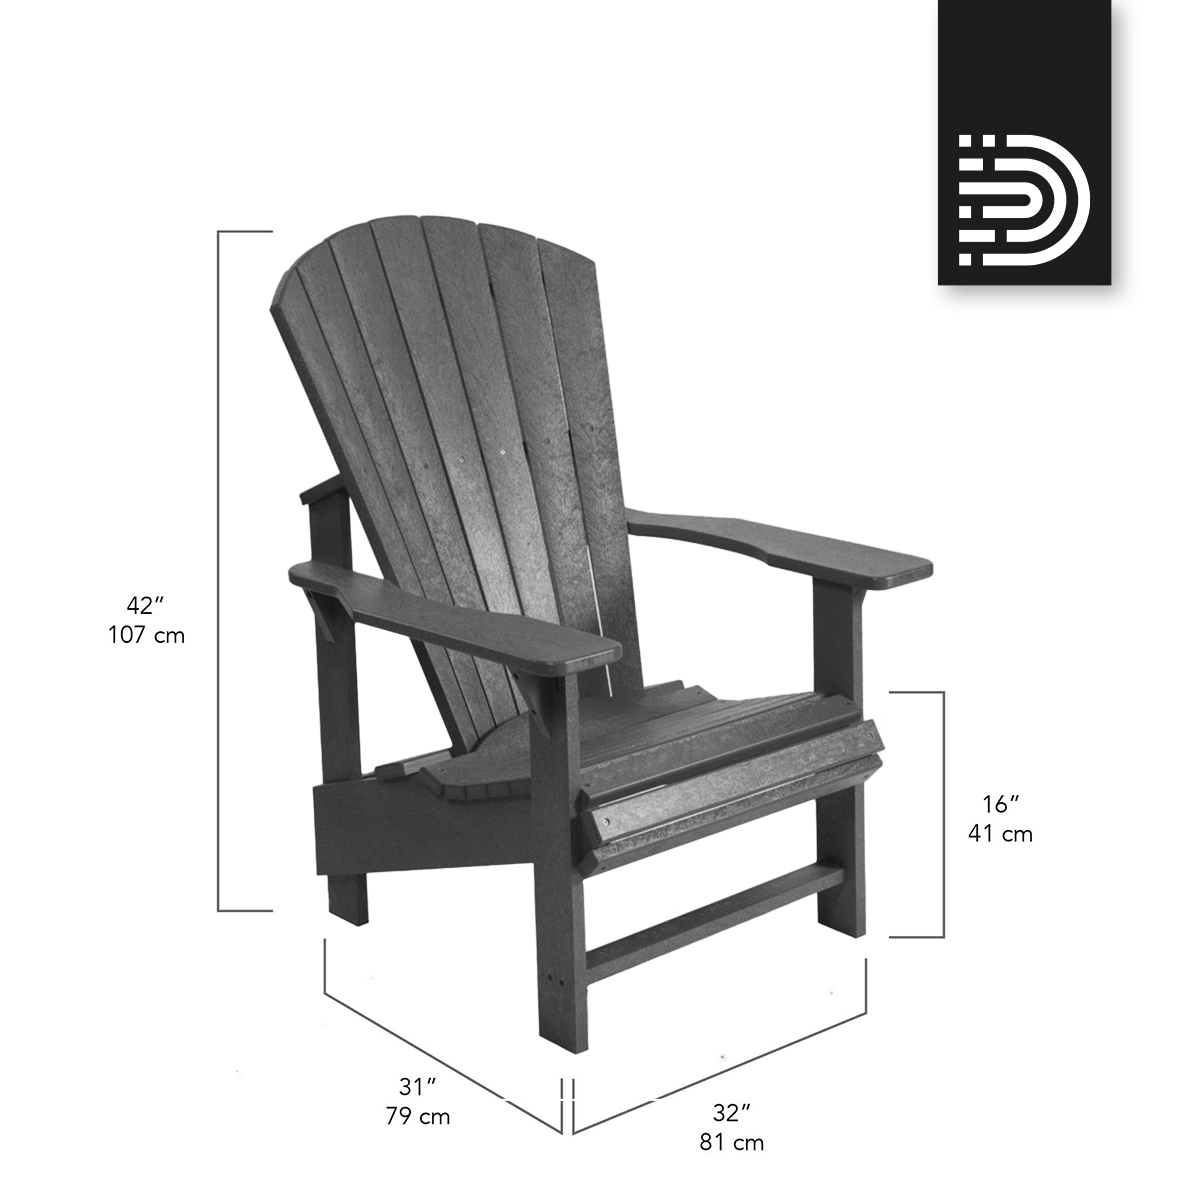 C03 Upright Adirondack Chair - Light Grey 19